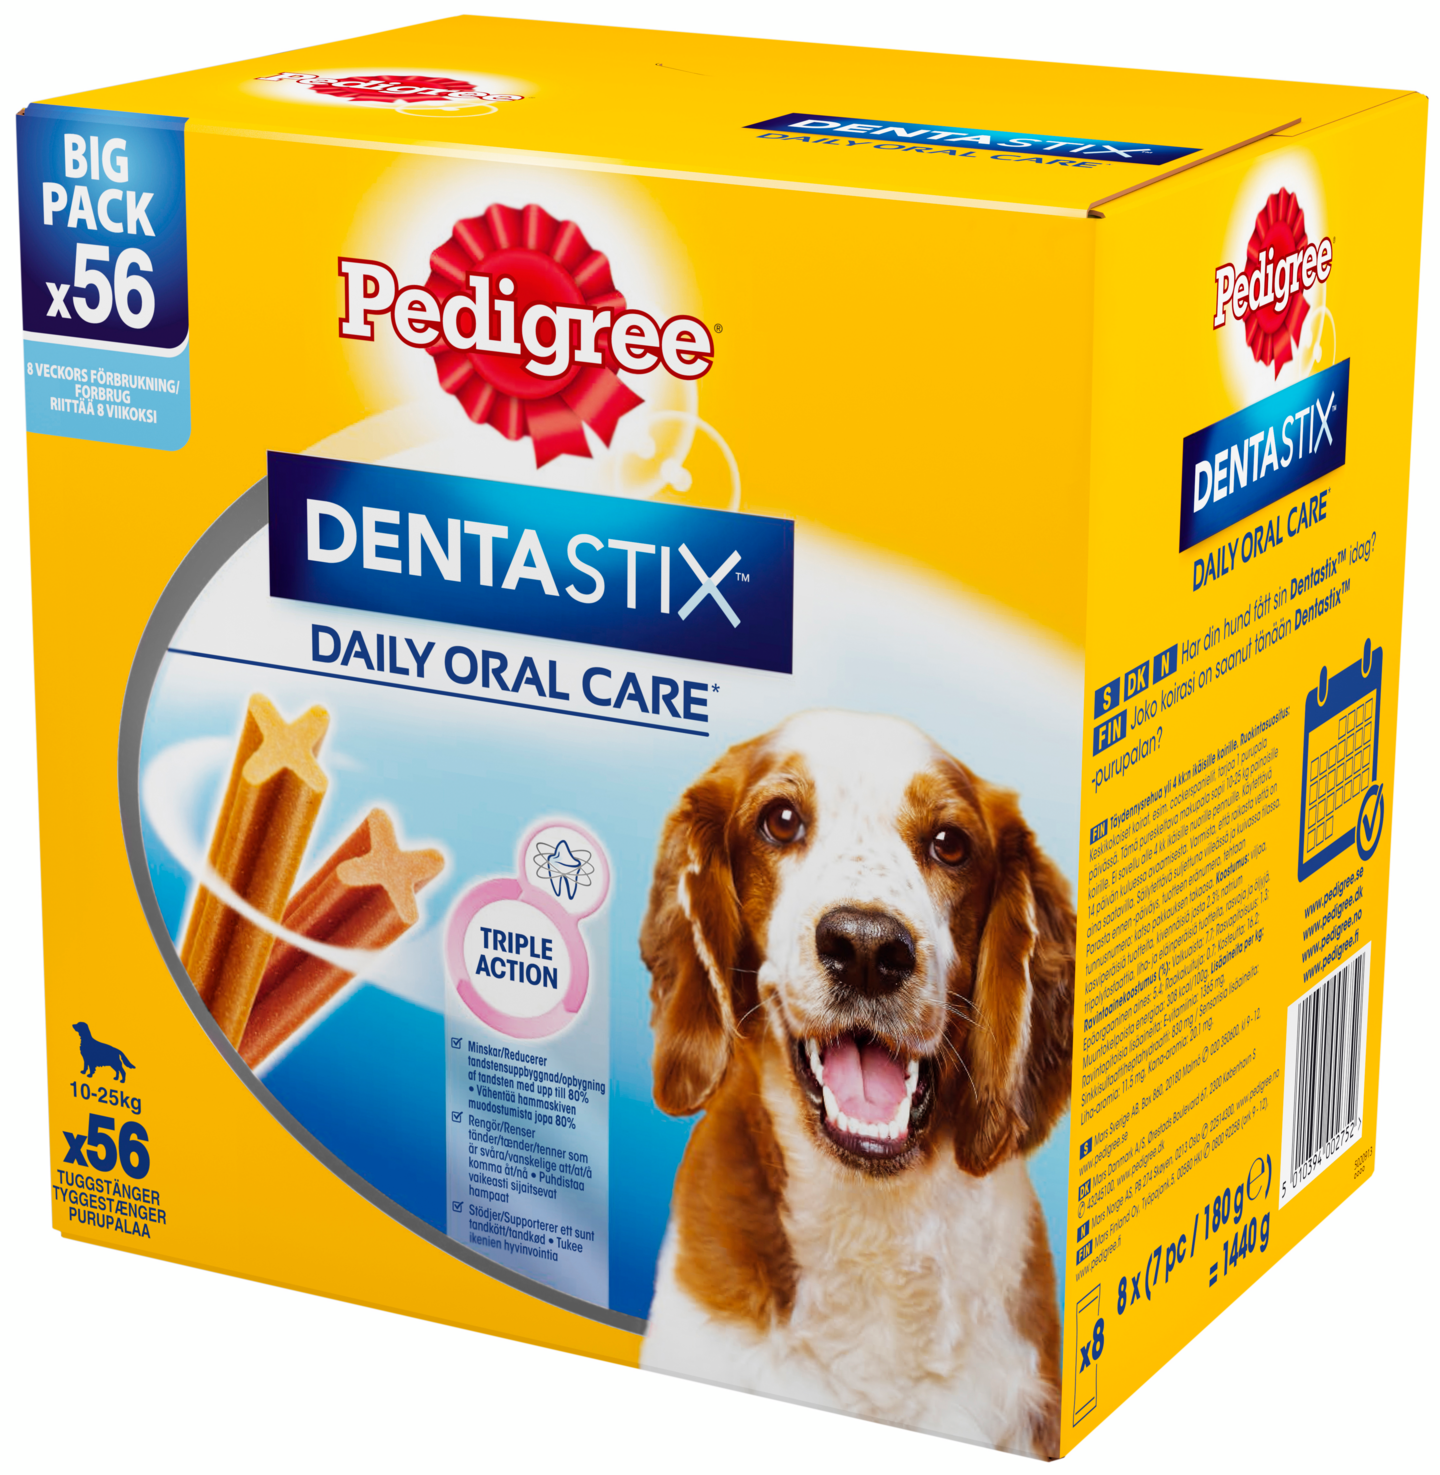 Pedigree Dentastix medium 56 pack